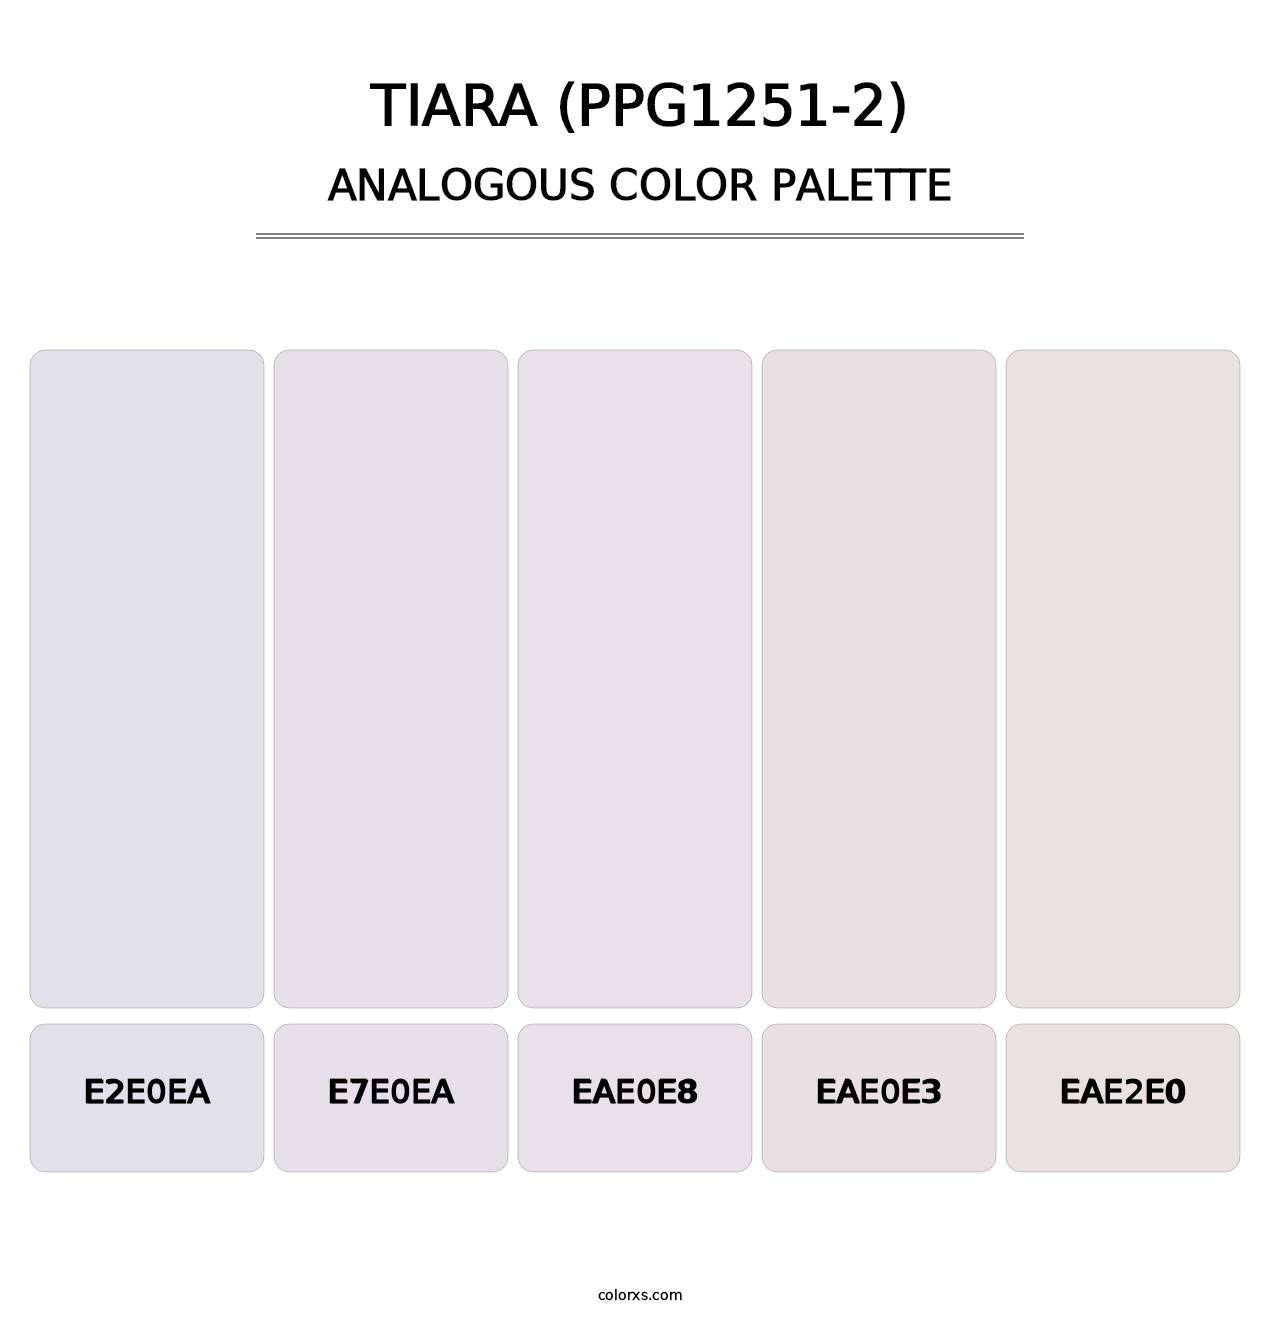 Tiara (PPG1251-2) - Analogous Color Palette